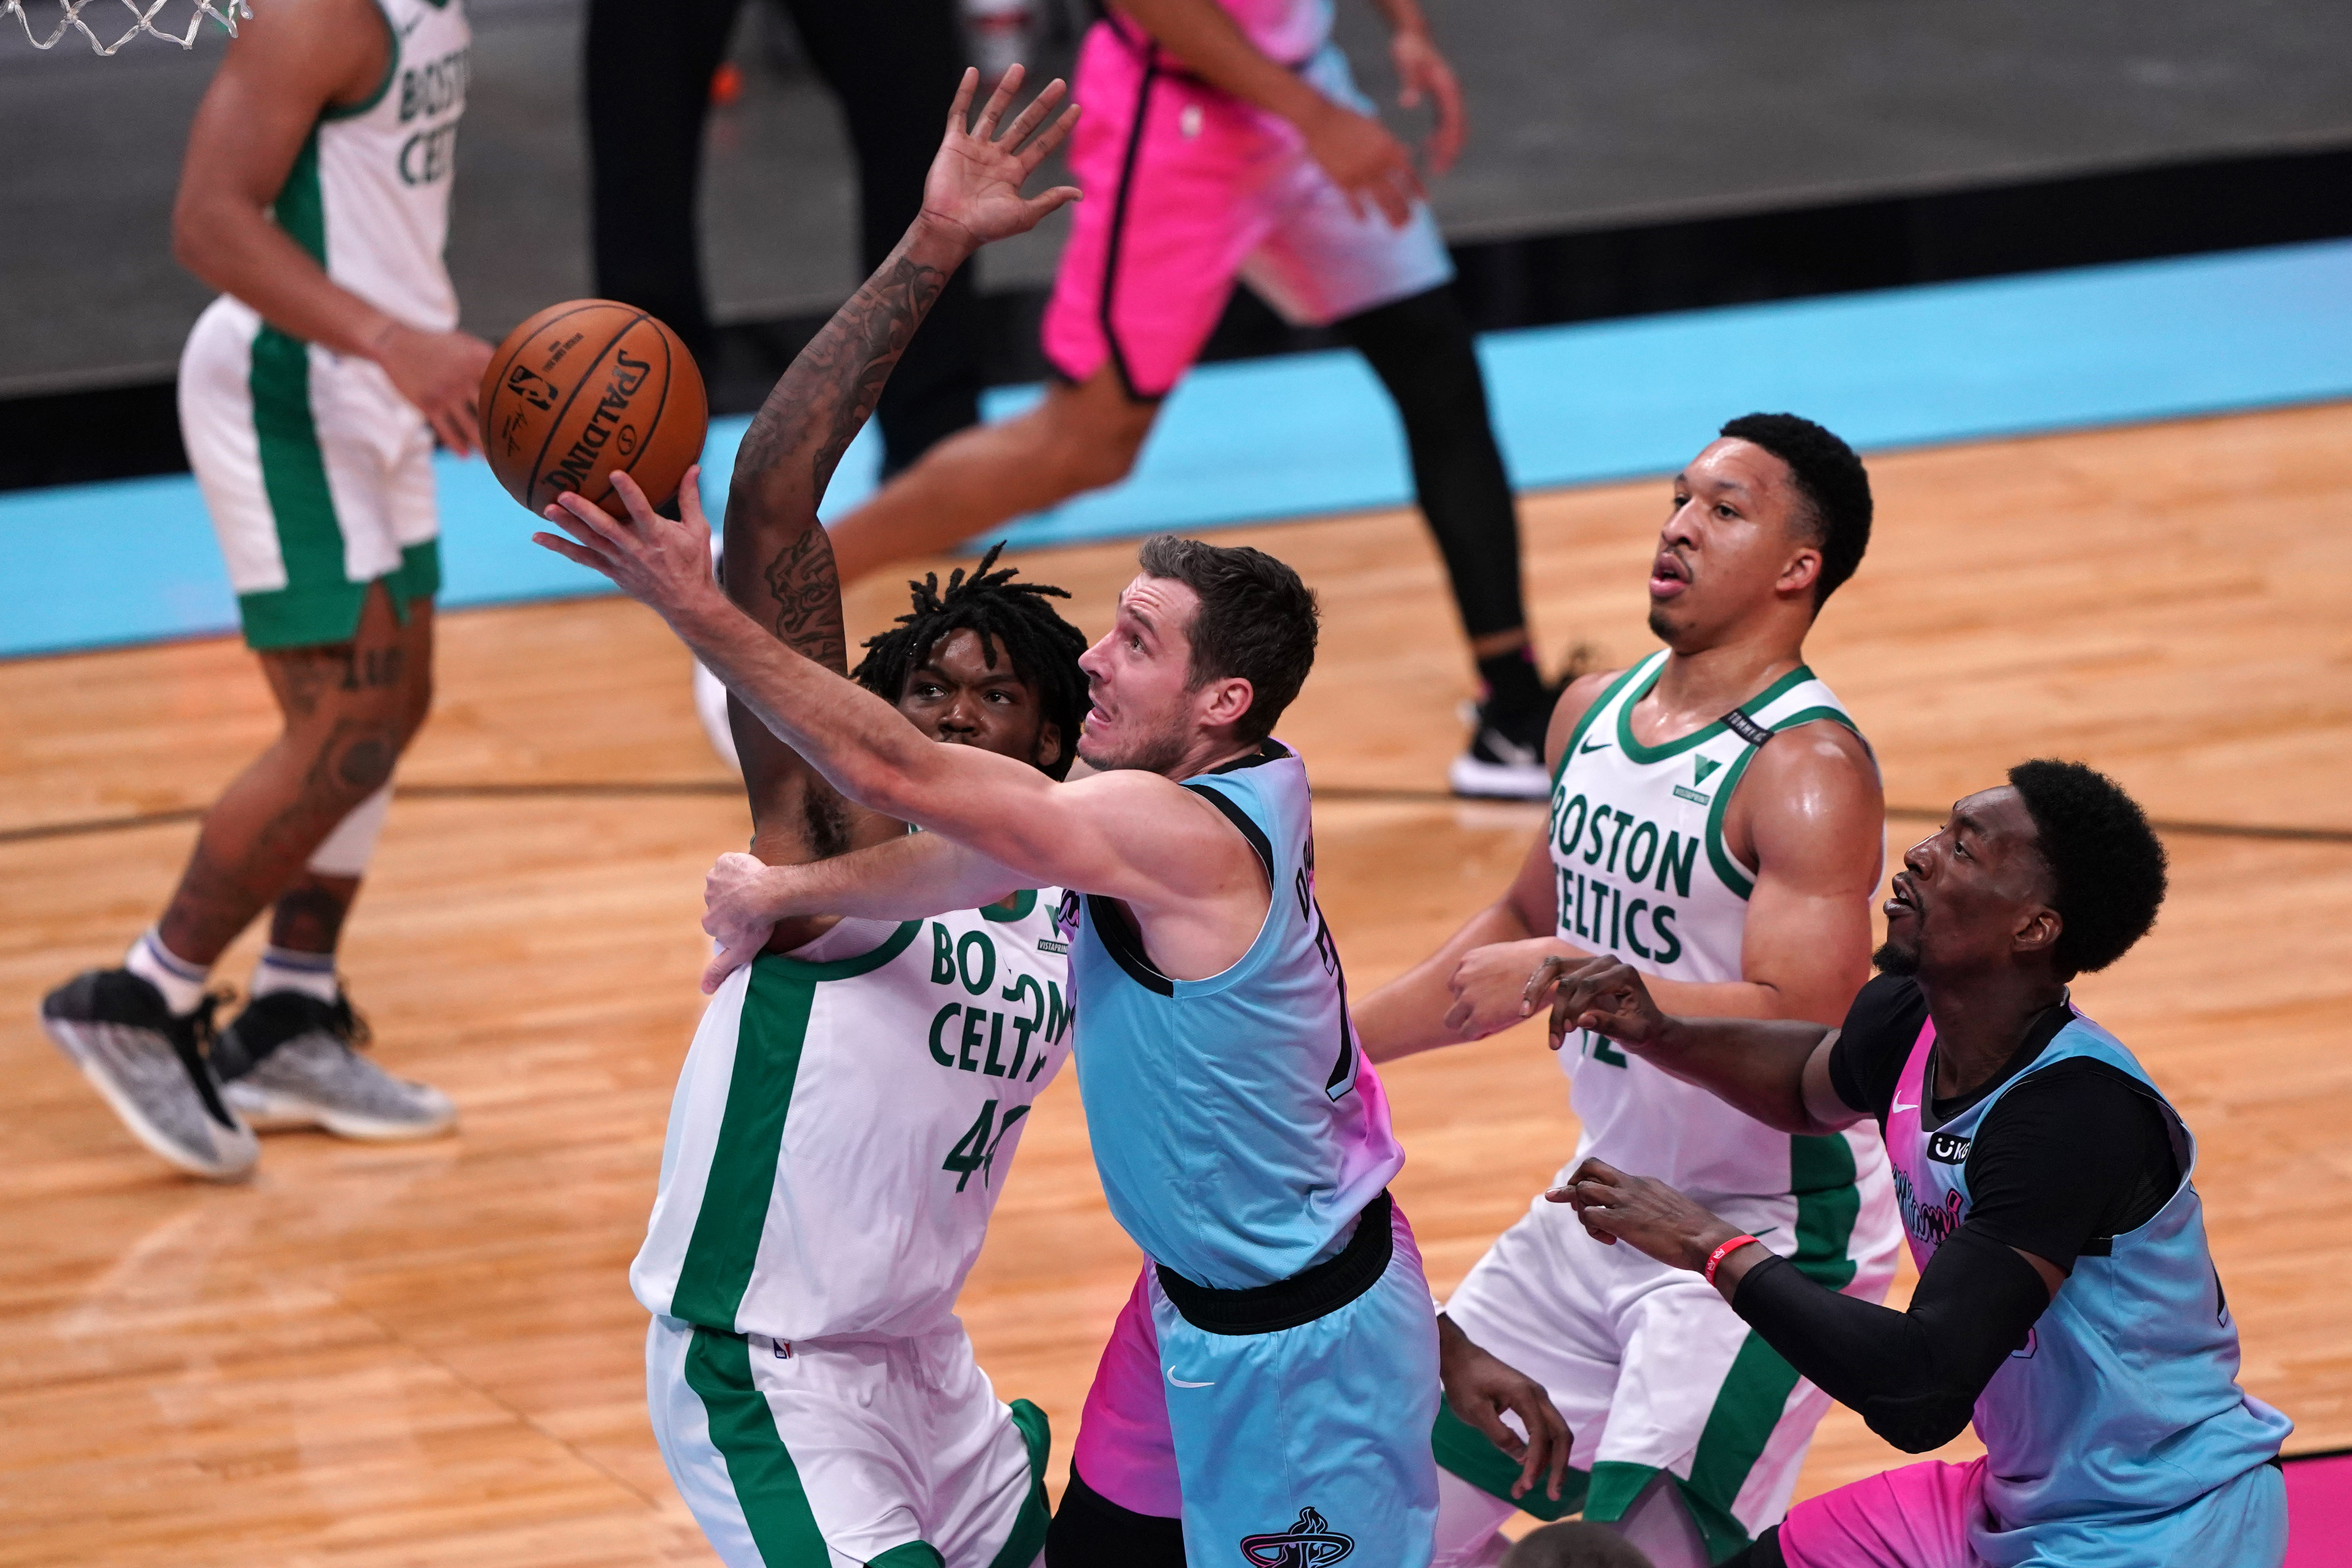 Celtics vs. Warriors: Gordon Hayward playing well turns Boston